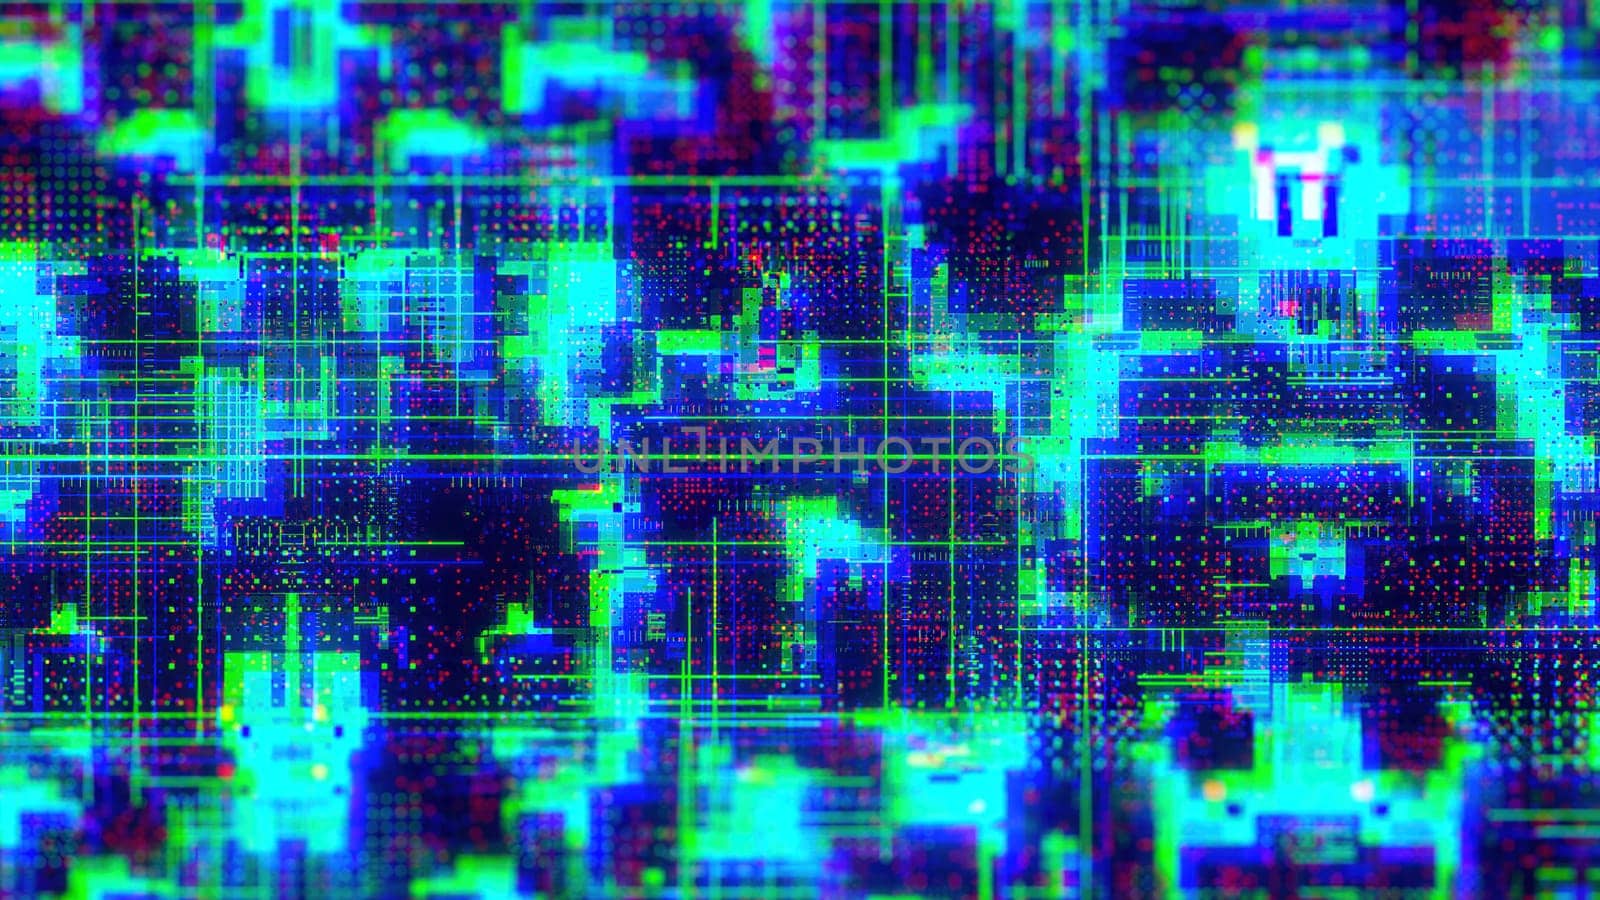 Cyberpunk technology background by nolimit046